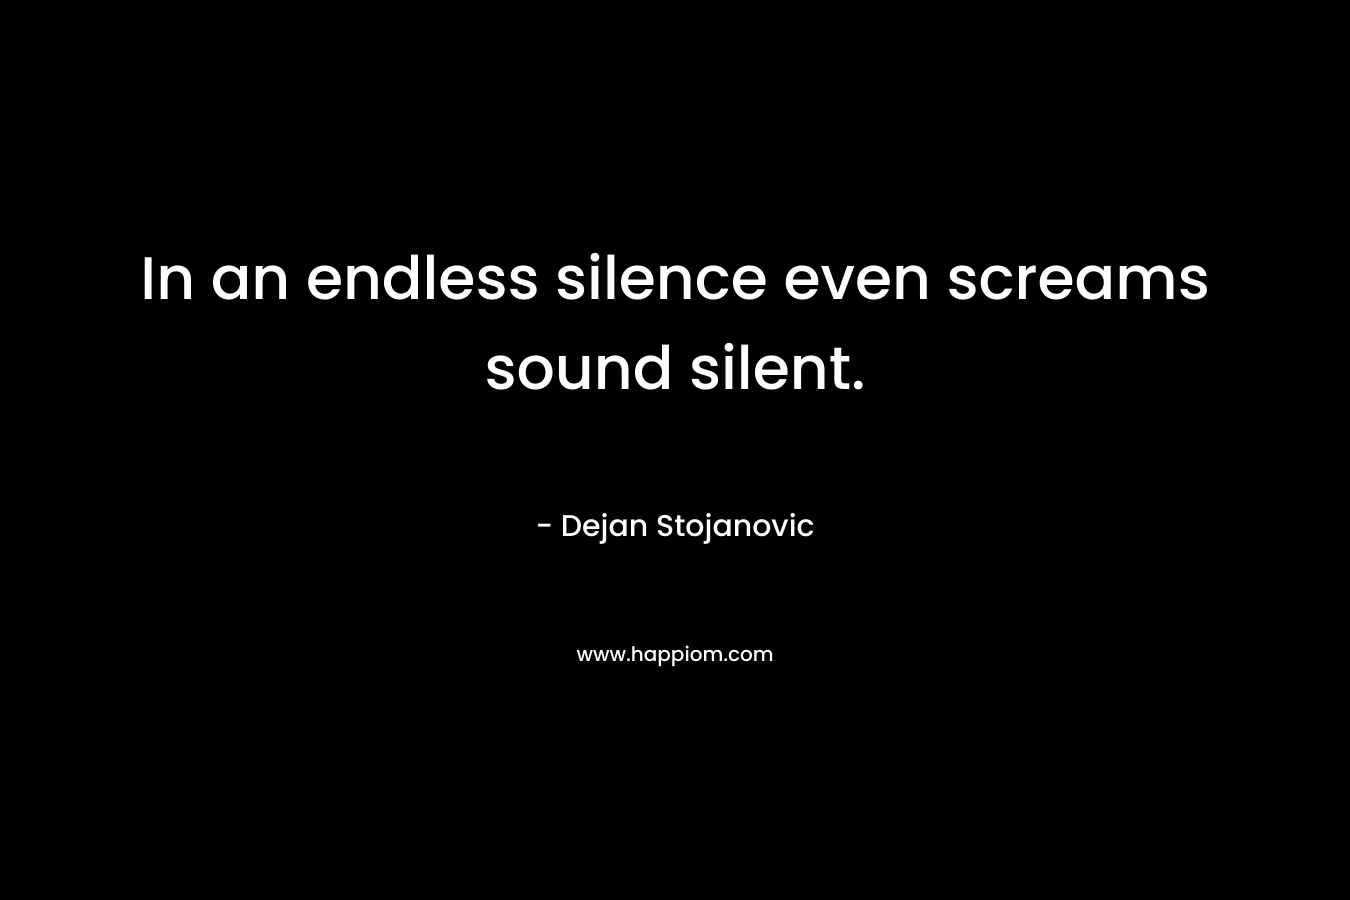 In an endless silence even screams sound silent.